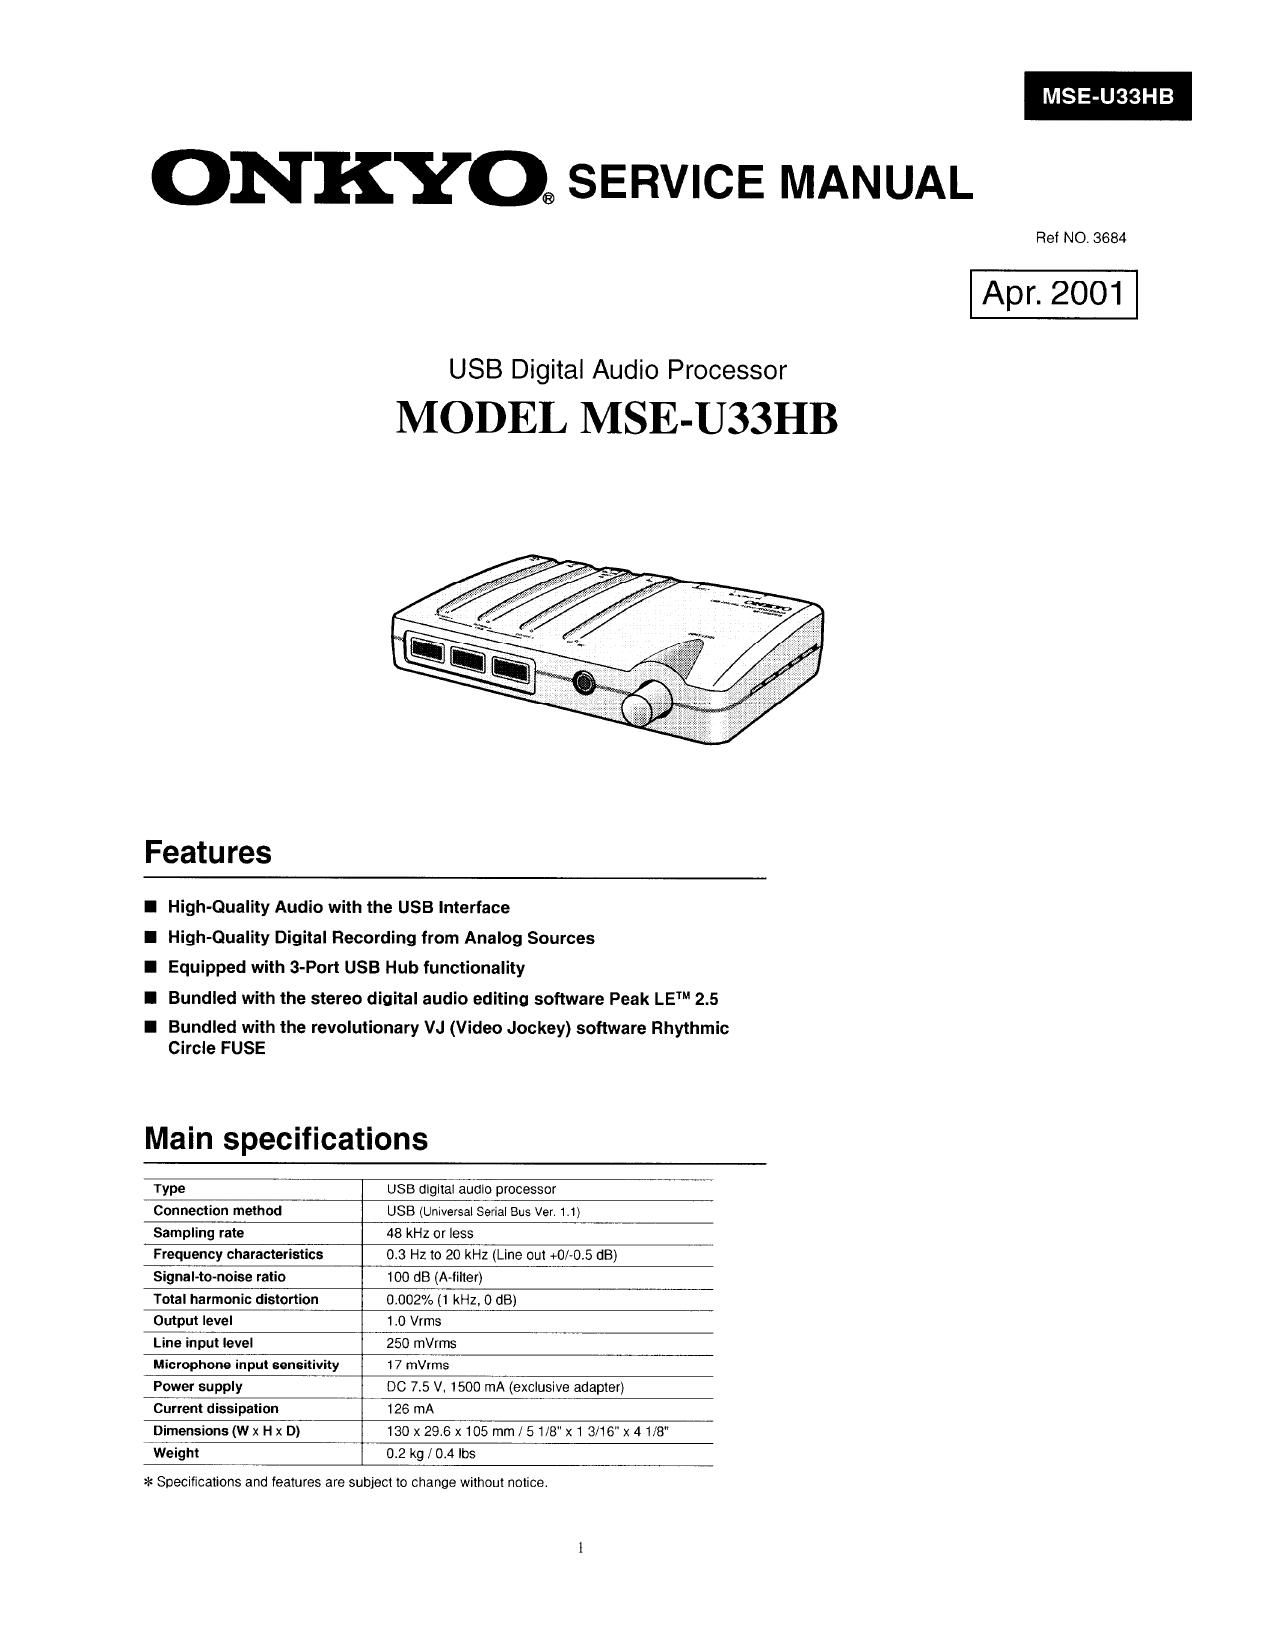 Onkyo MSEU 33 HB Service Manual